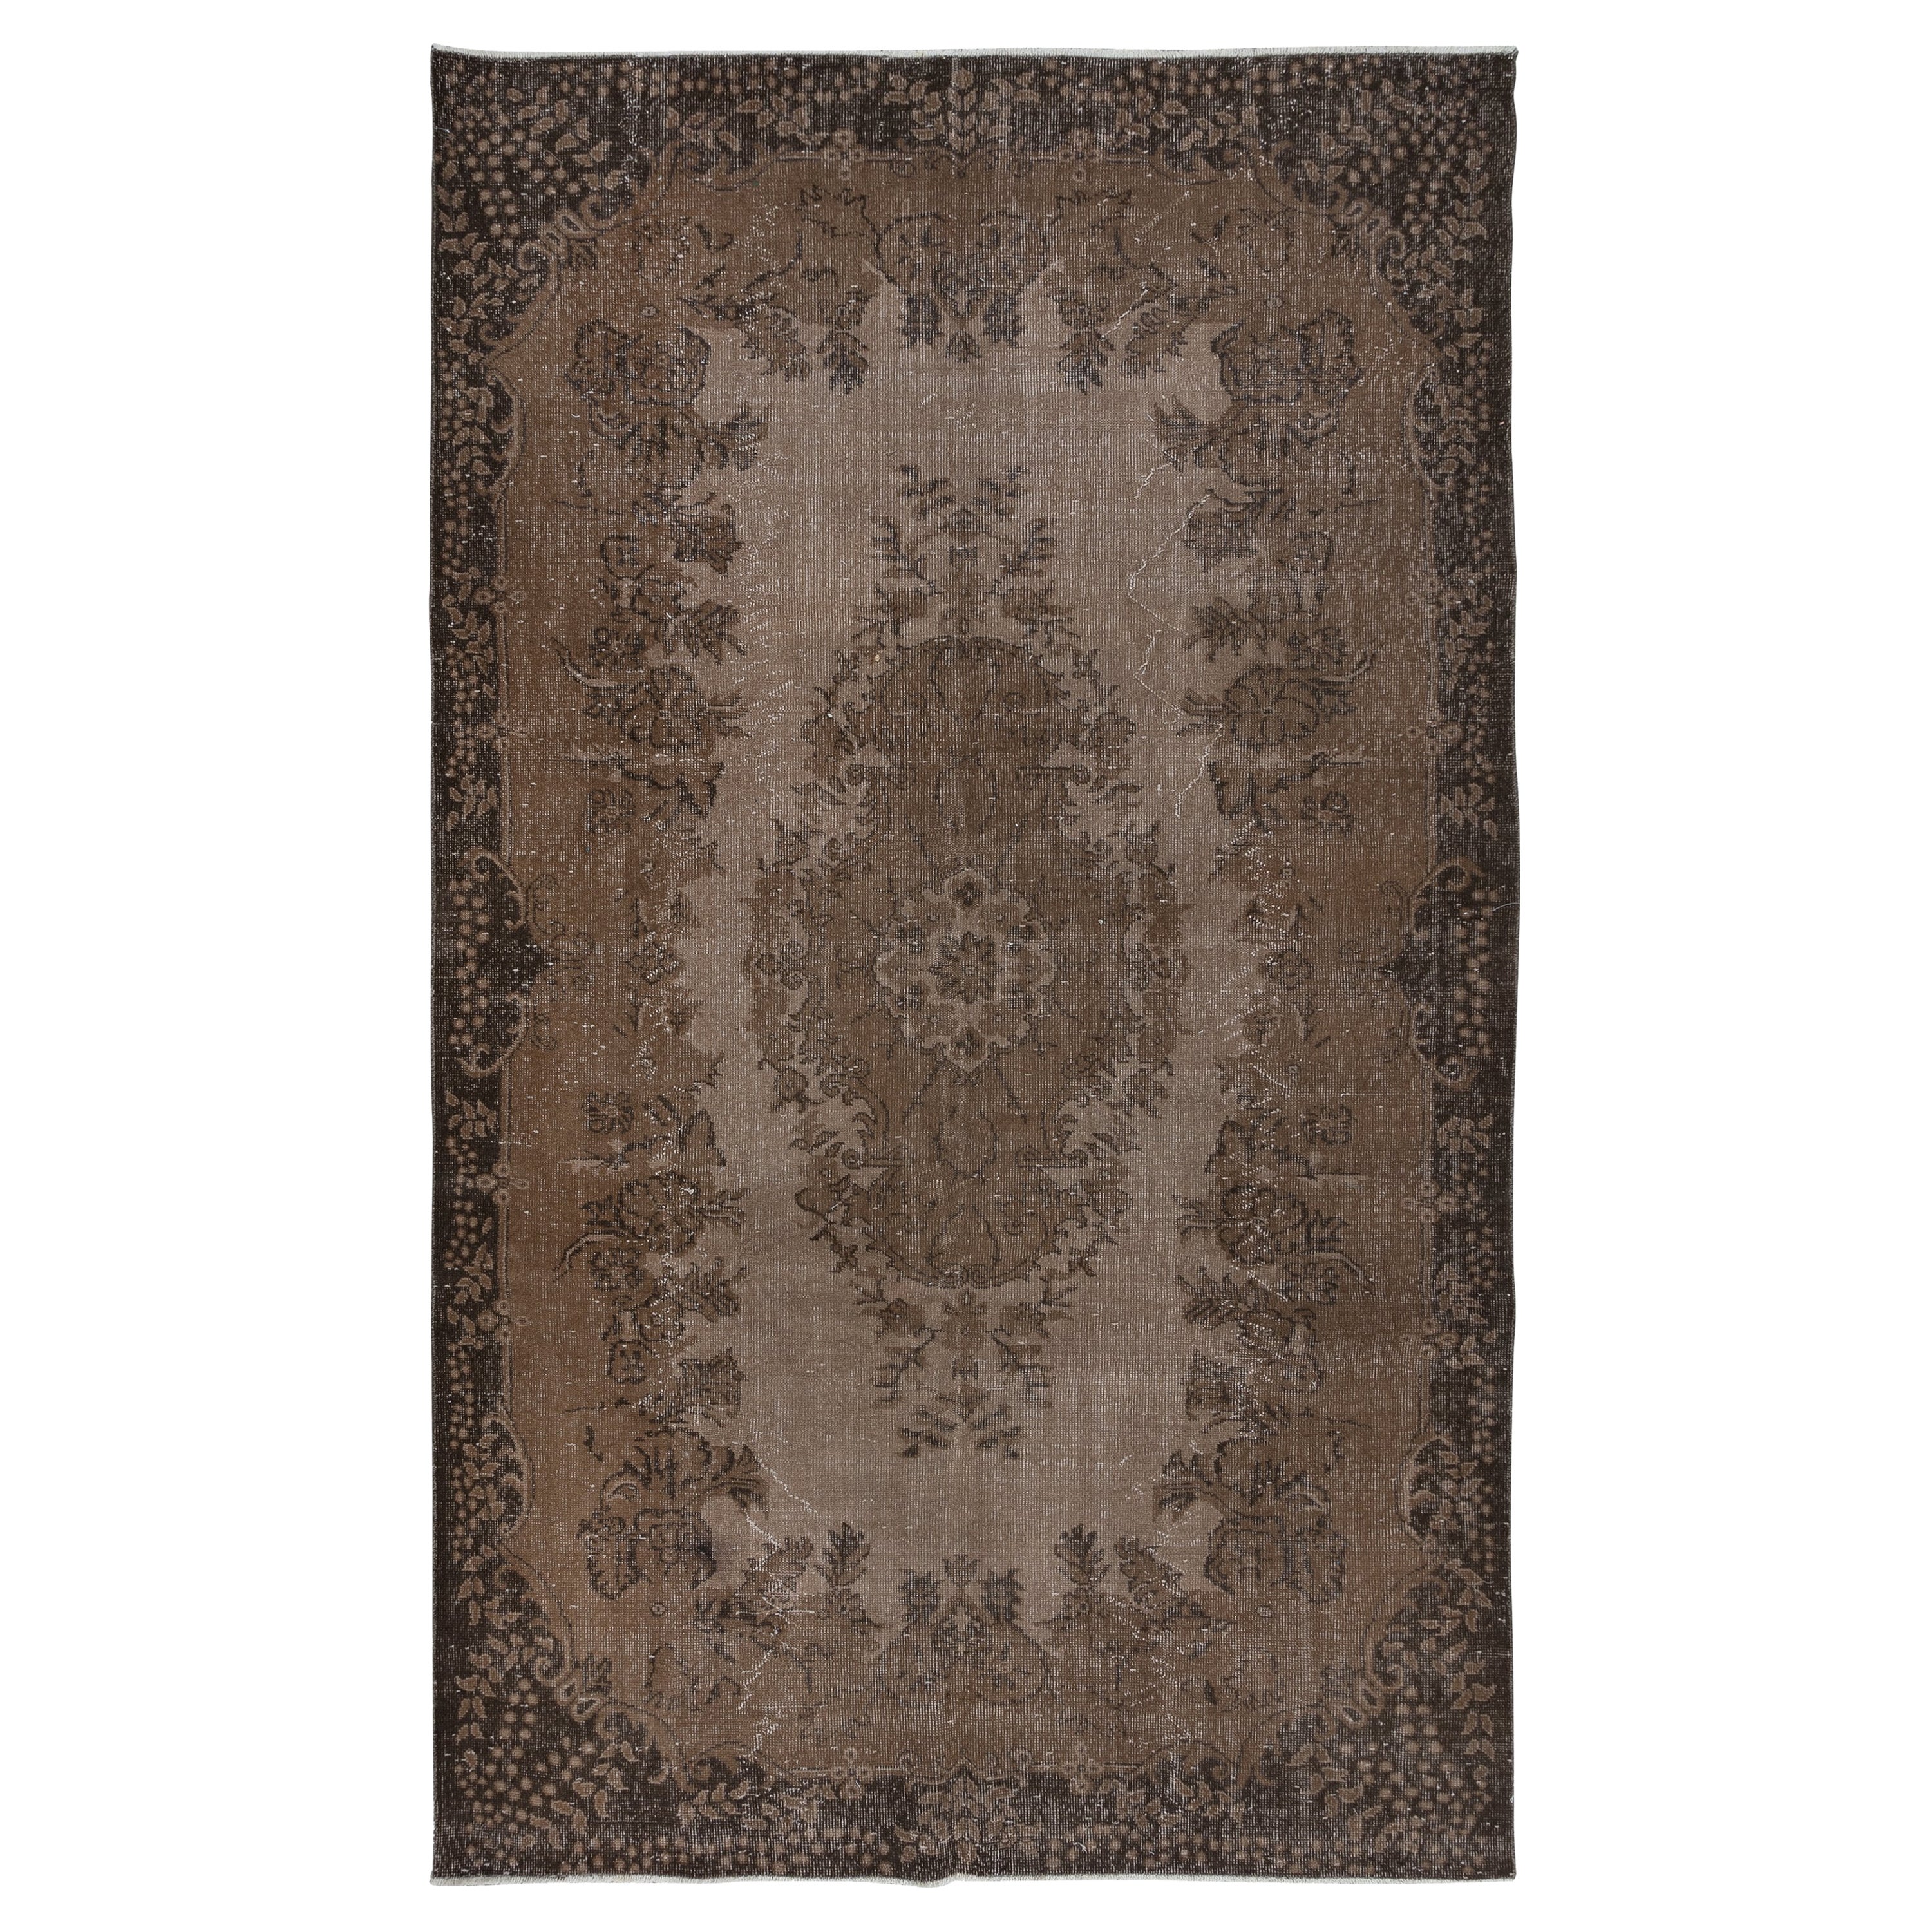 6x9.8 Ft Handmade Turkish Rug, Brown Medallion Design Carpet for Living Room For Sale